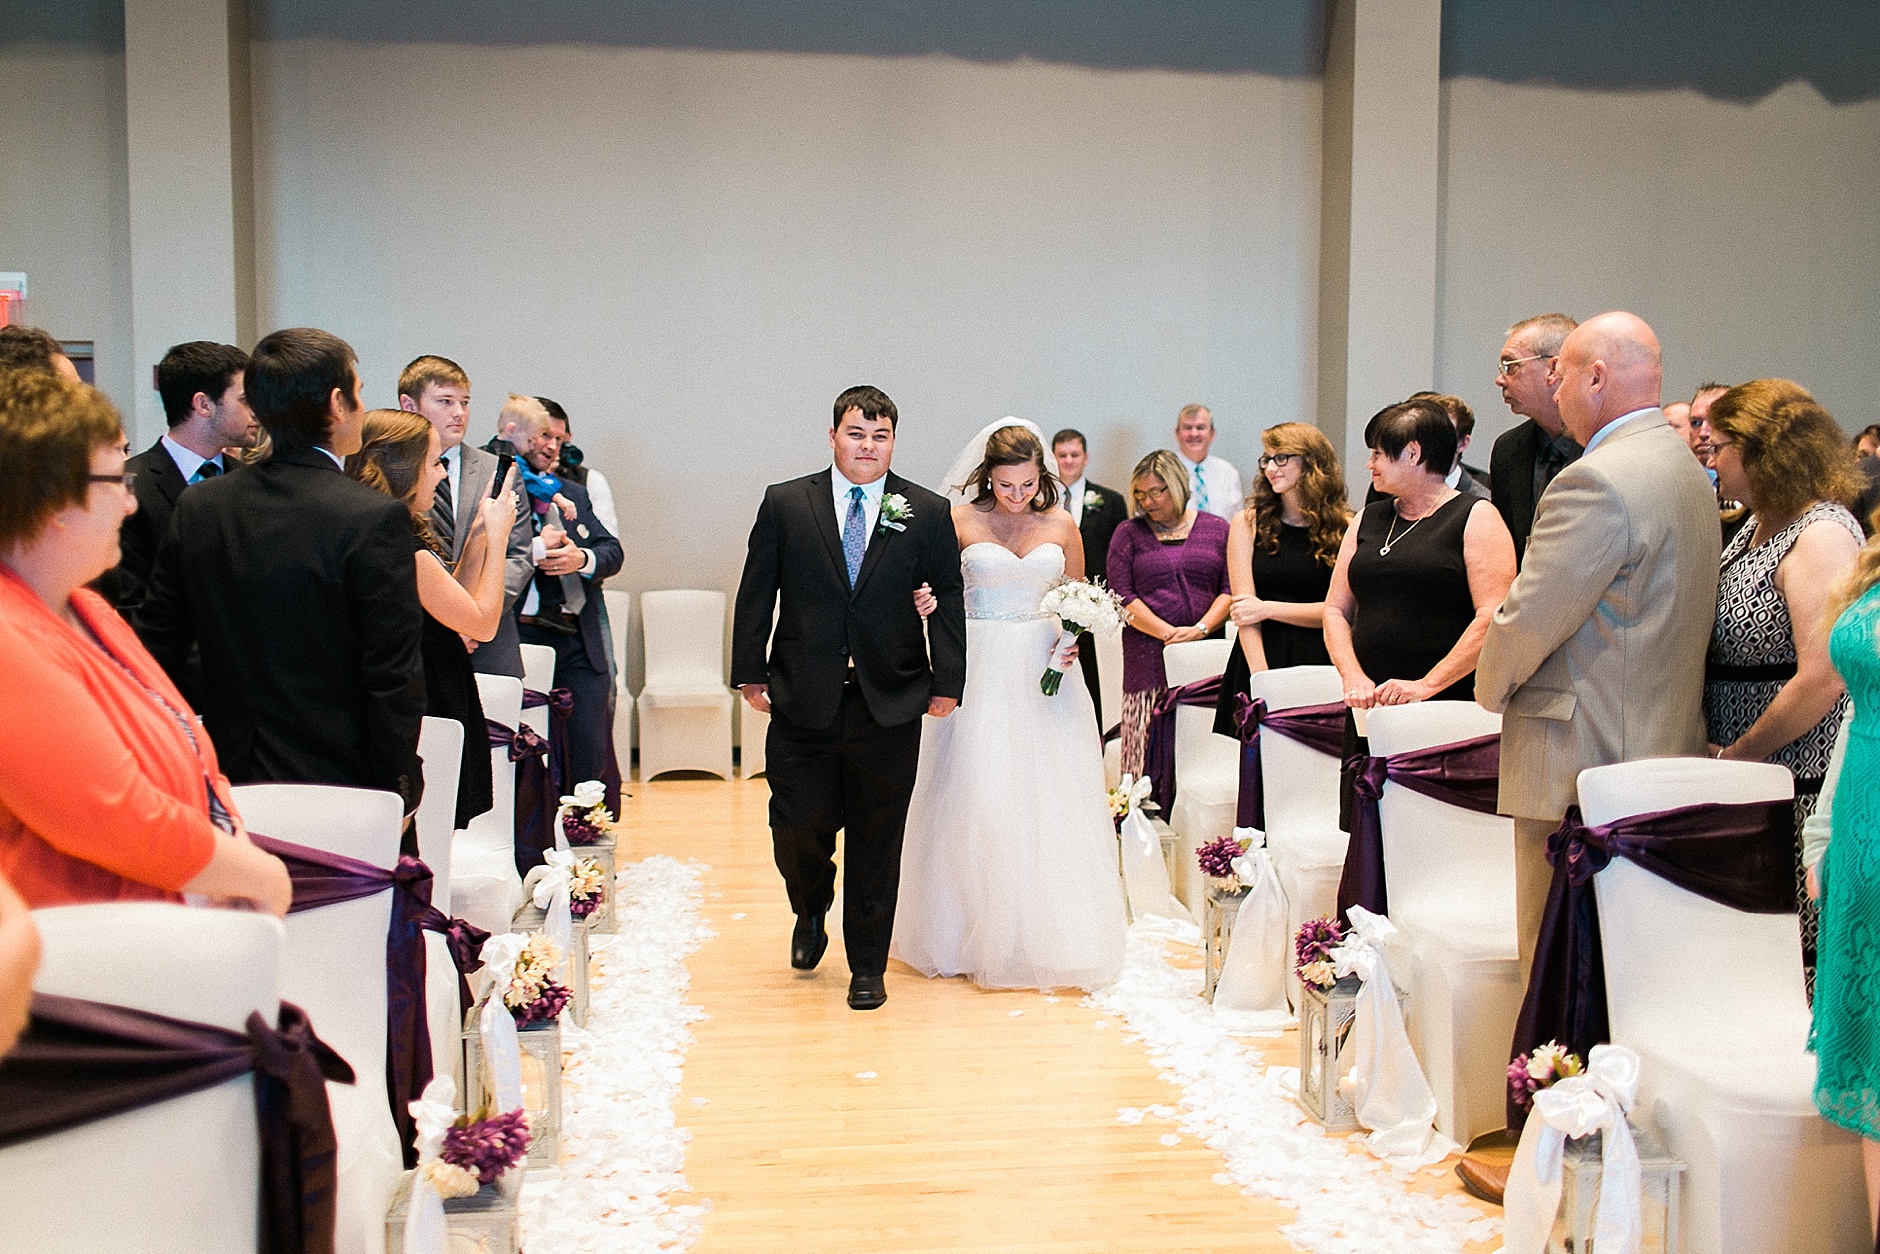 A Carson Center, Paducah Kentucky Wedding, Rachael Houser Photography